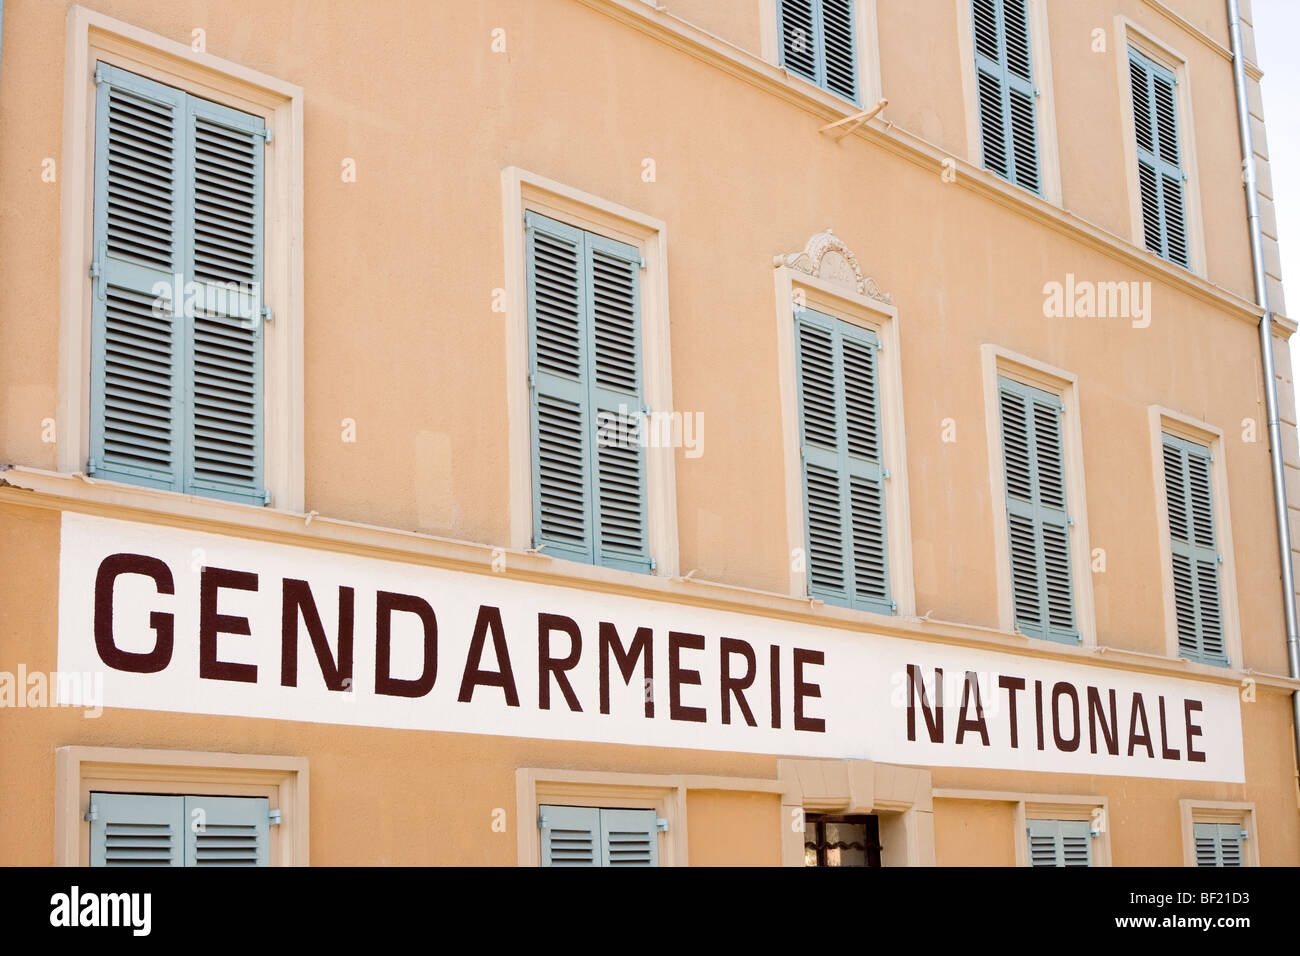 Gendarmerie nationale, Saint Tropez,France Stock Photo